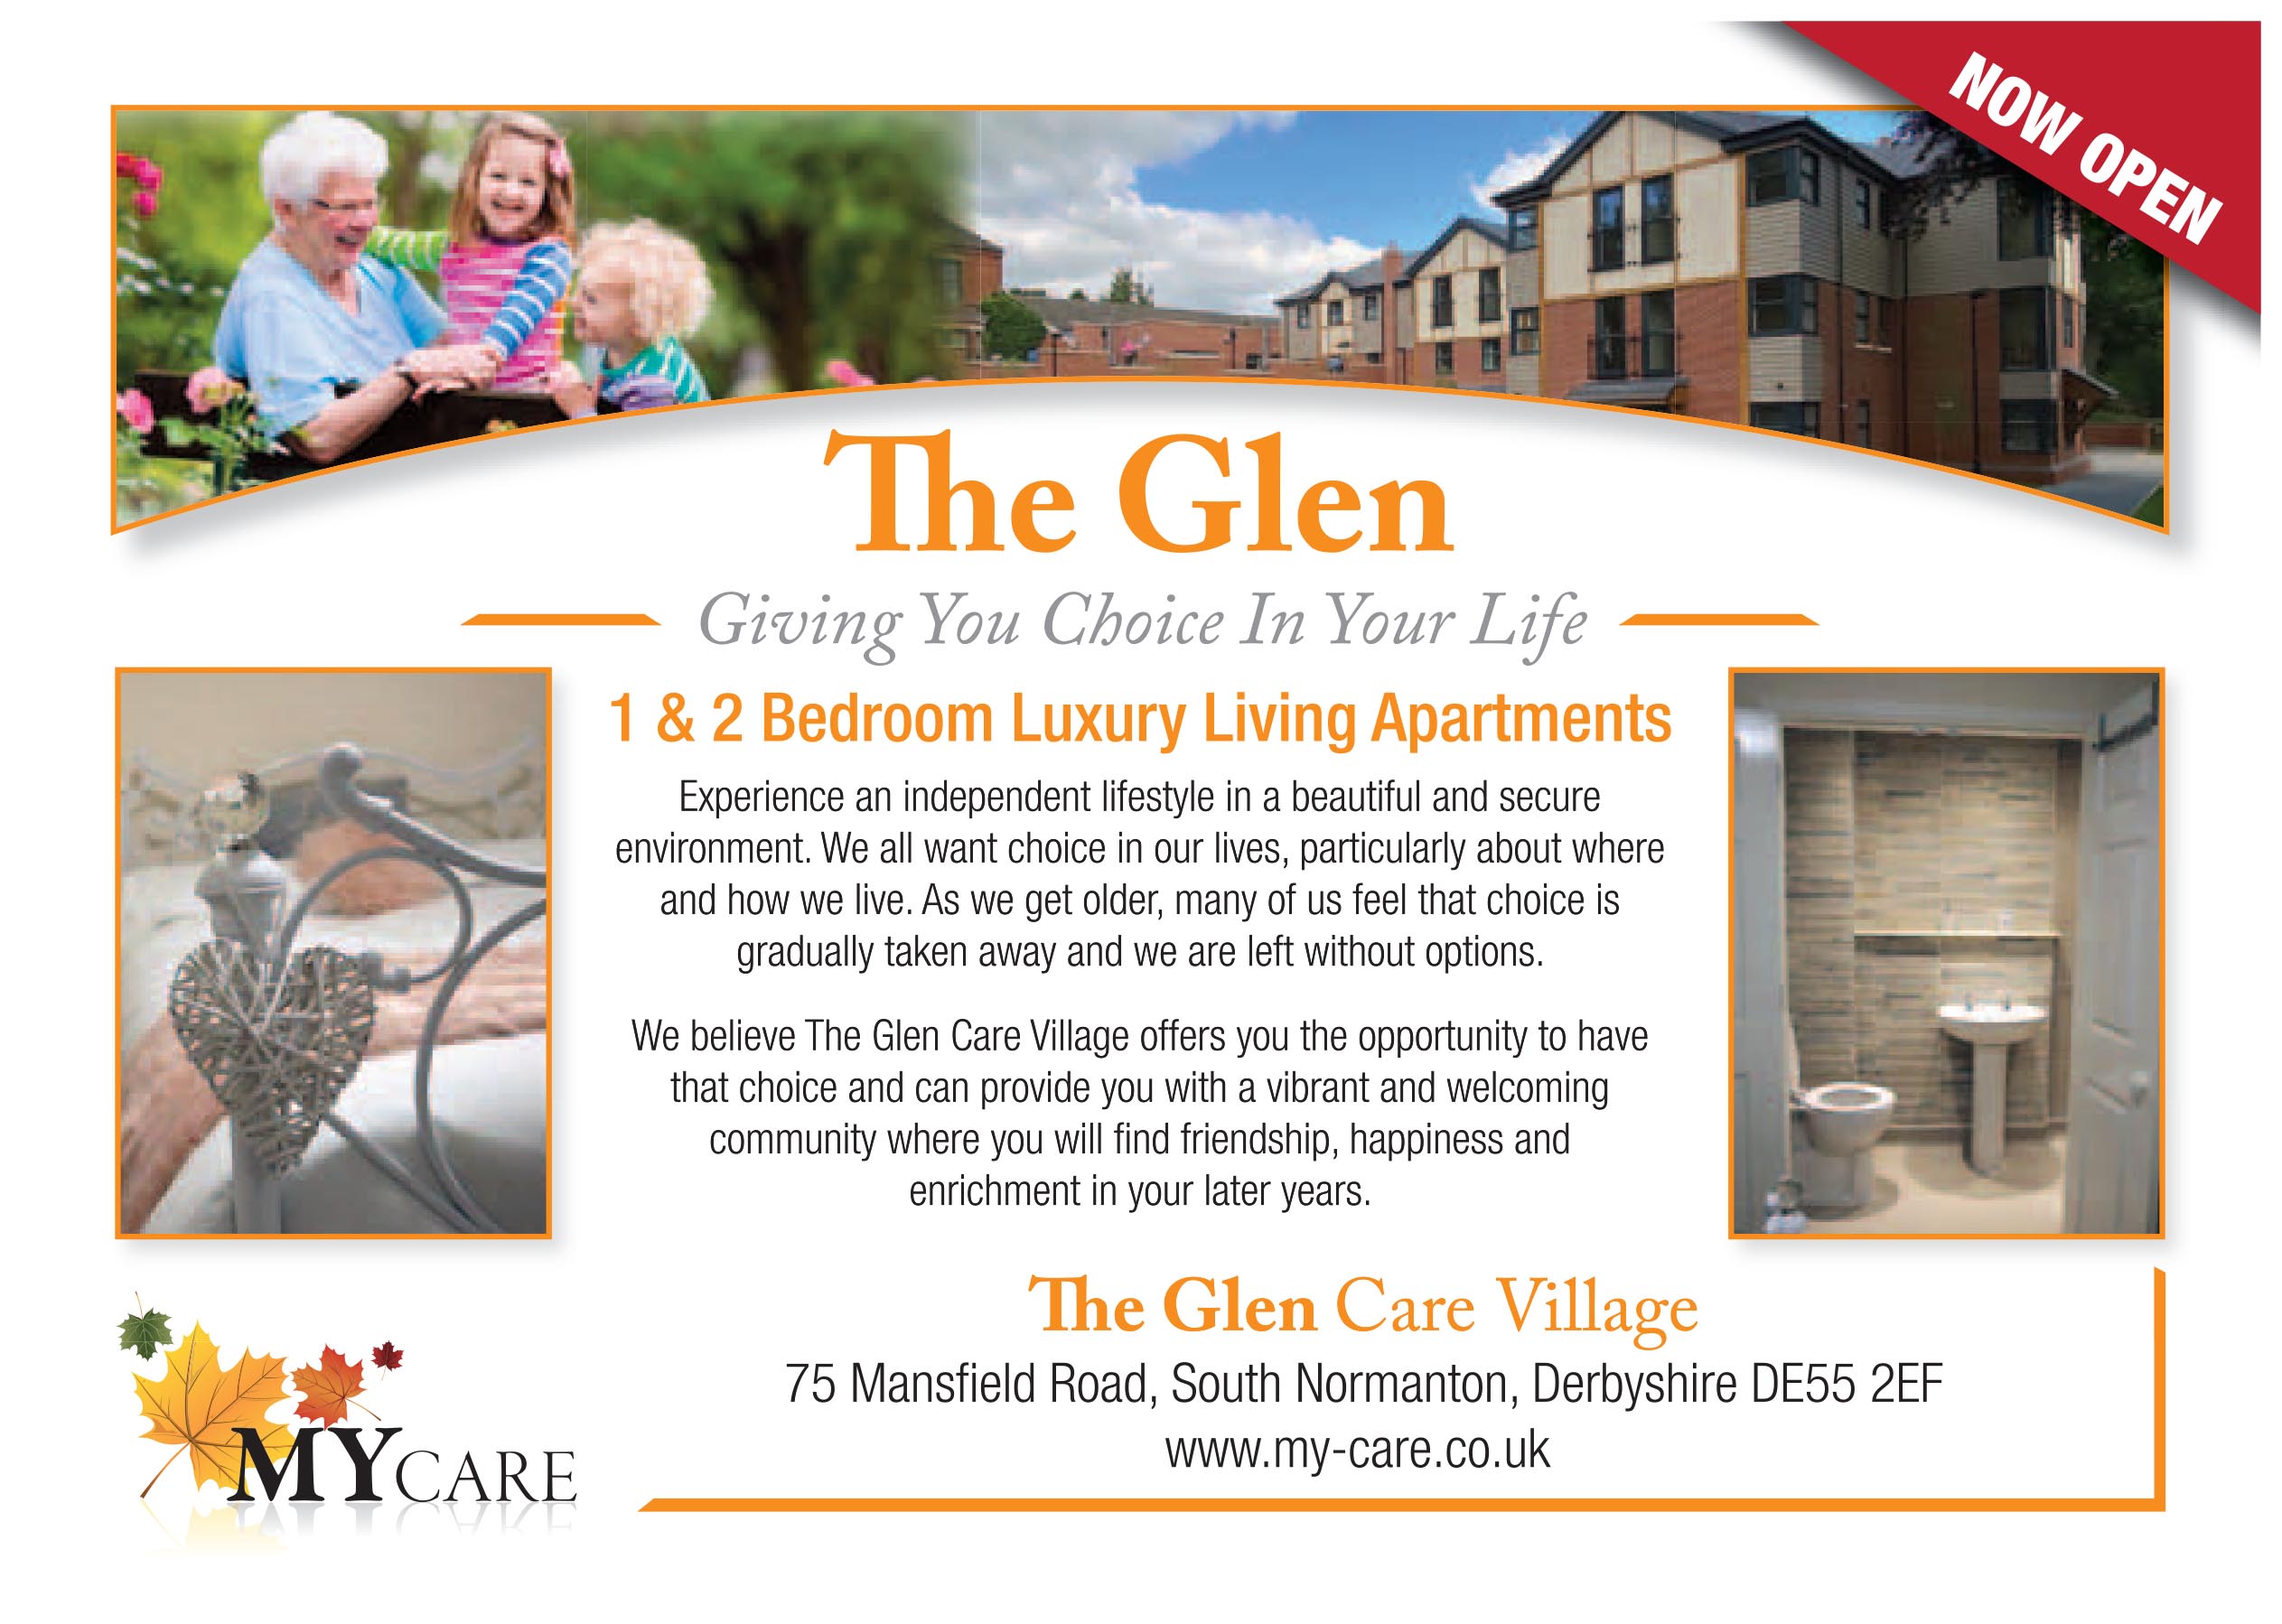 The Glen Care Village